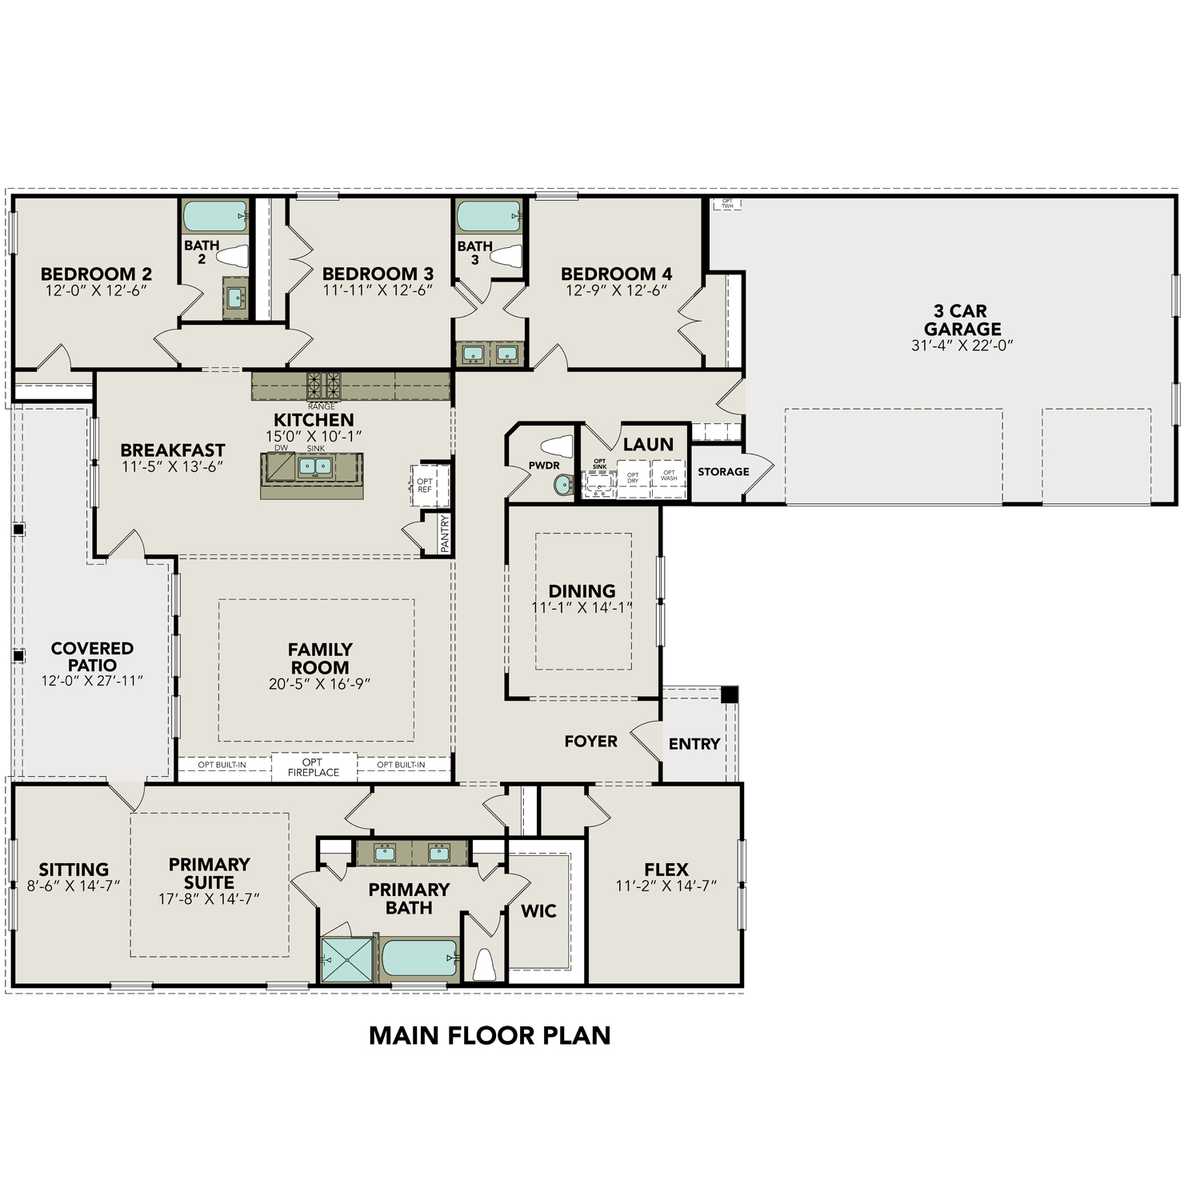 1 - The Oxford E floor plan layout for 131 Matthew Path in Davidson Homes' Potranco Oaks community.